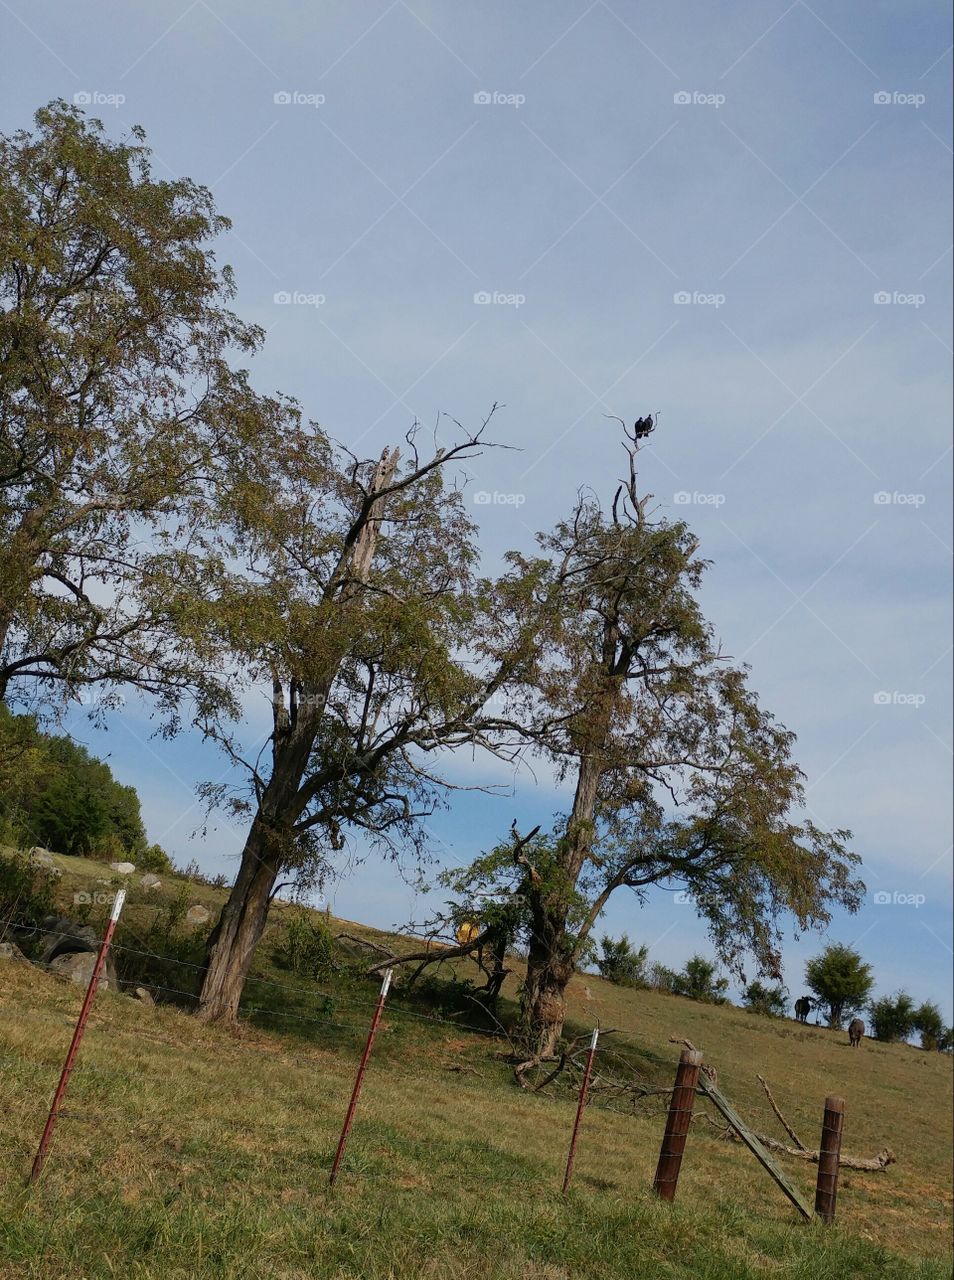 Turkey Vulture at uppermost branch